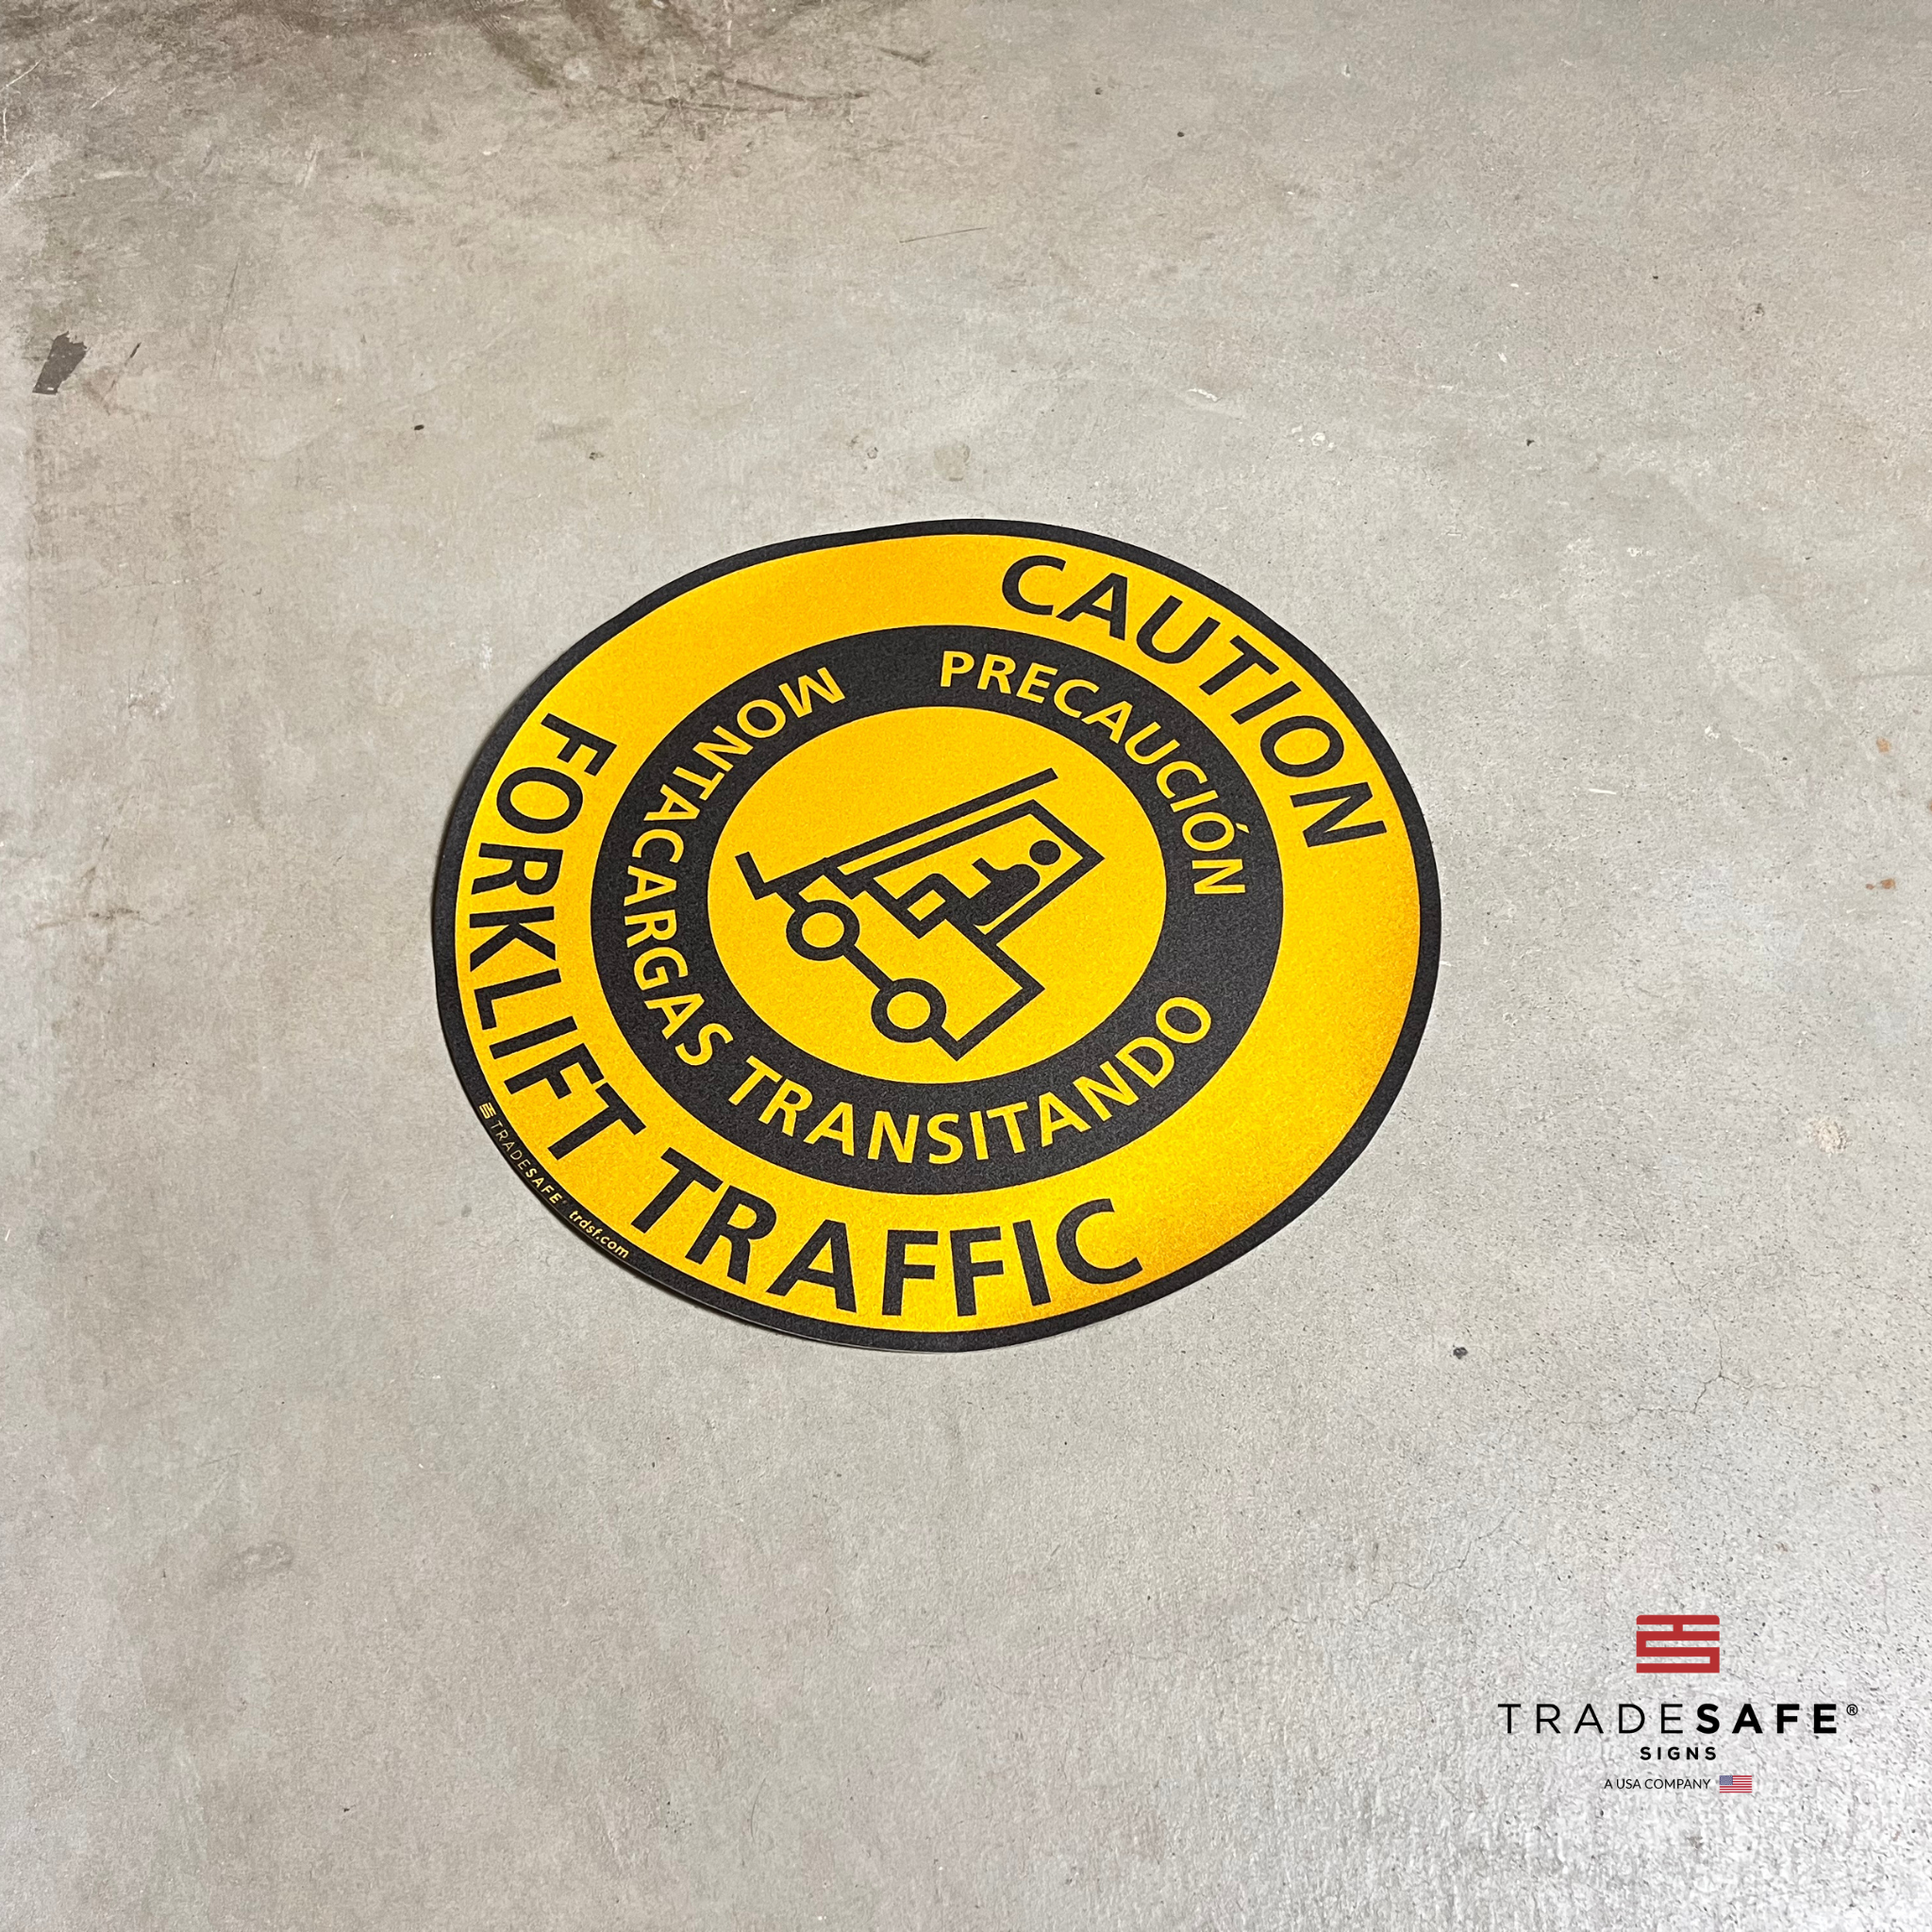 TRADESAFE Bilingual Caution Forklift Traffic Anti-Slip Floor Sticker - Precaución Montacargas Transitando Caution Sign, Peel and Stick Adhesive